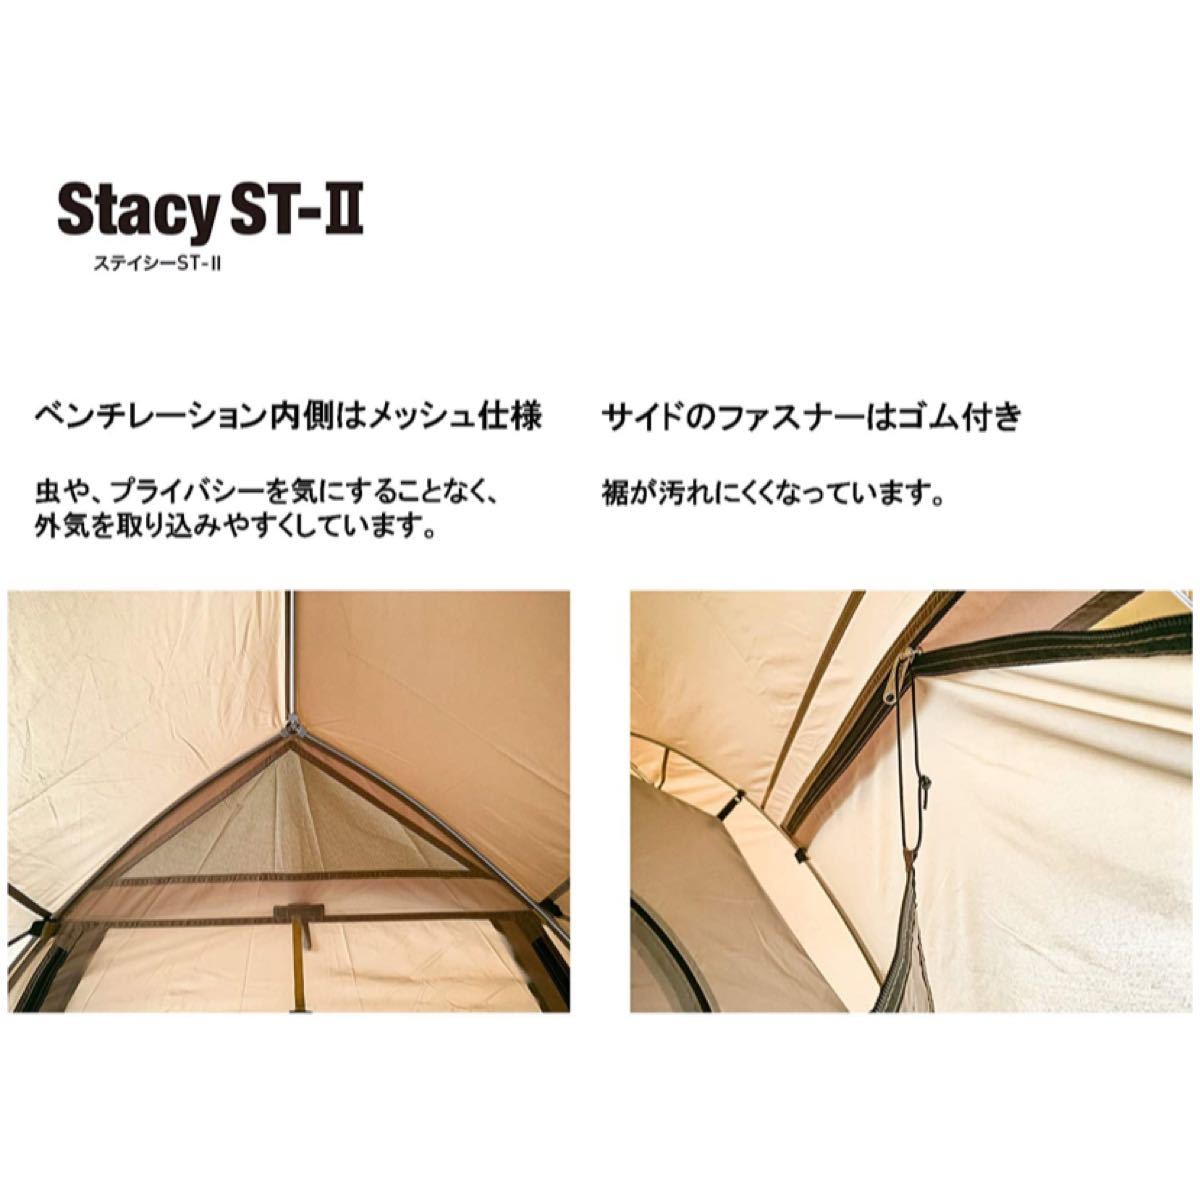 ogawa(オガワ) アウトドア キャンプ テント ドーム型 ステイシー 【2~3人用】 2616